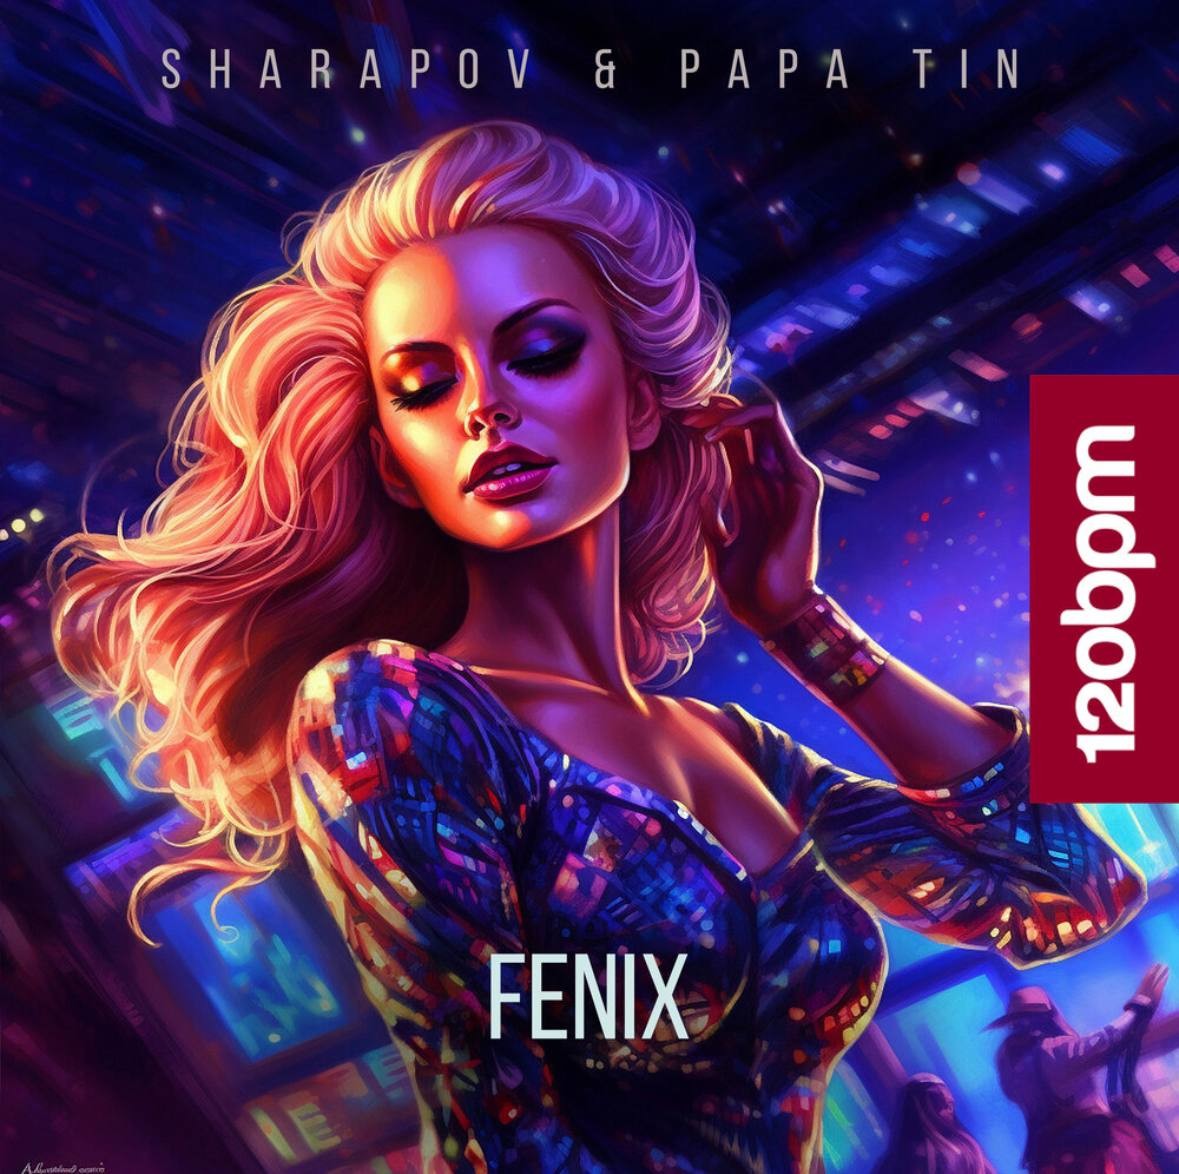 Sharapov & Papa Tin - Fenix (Original Mix)